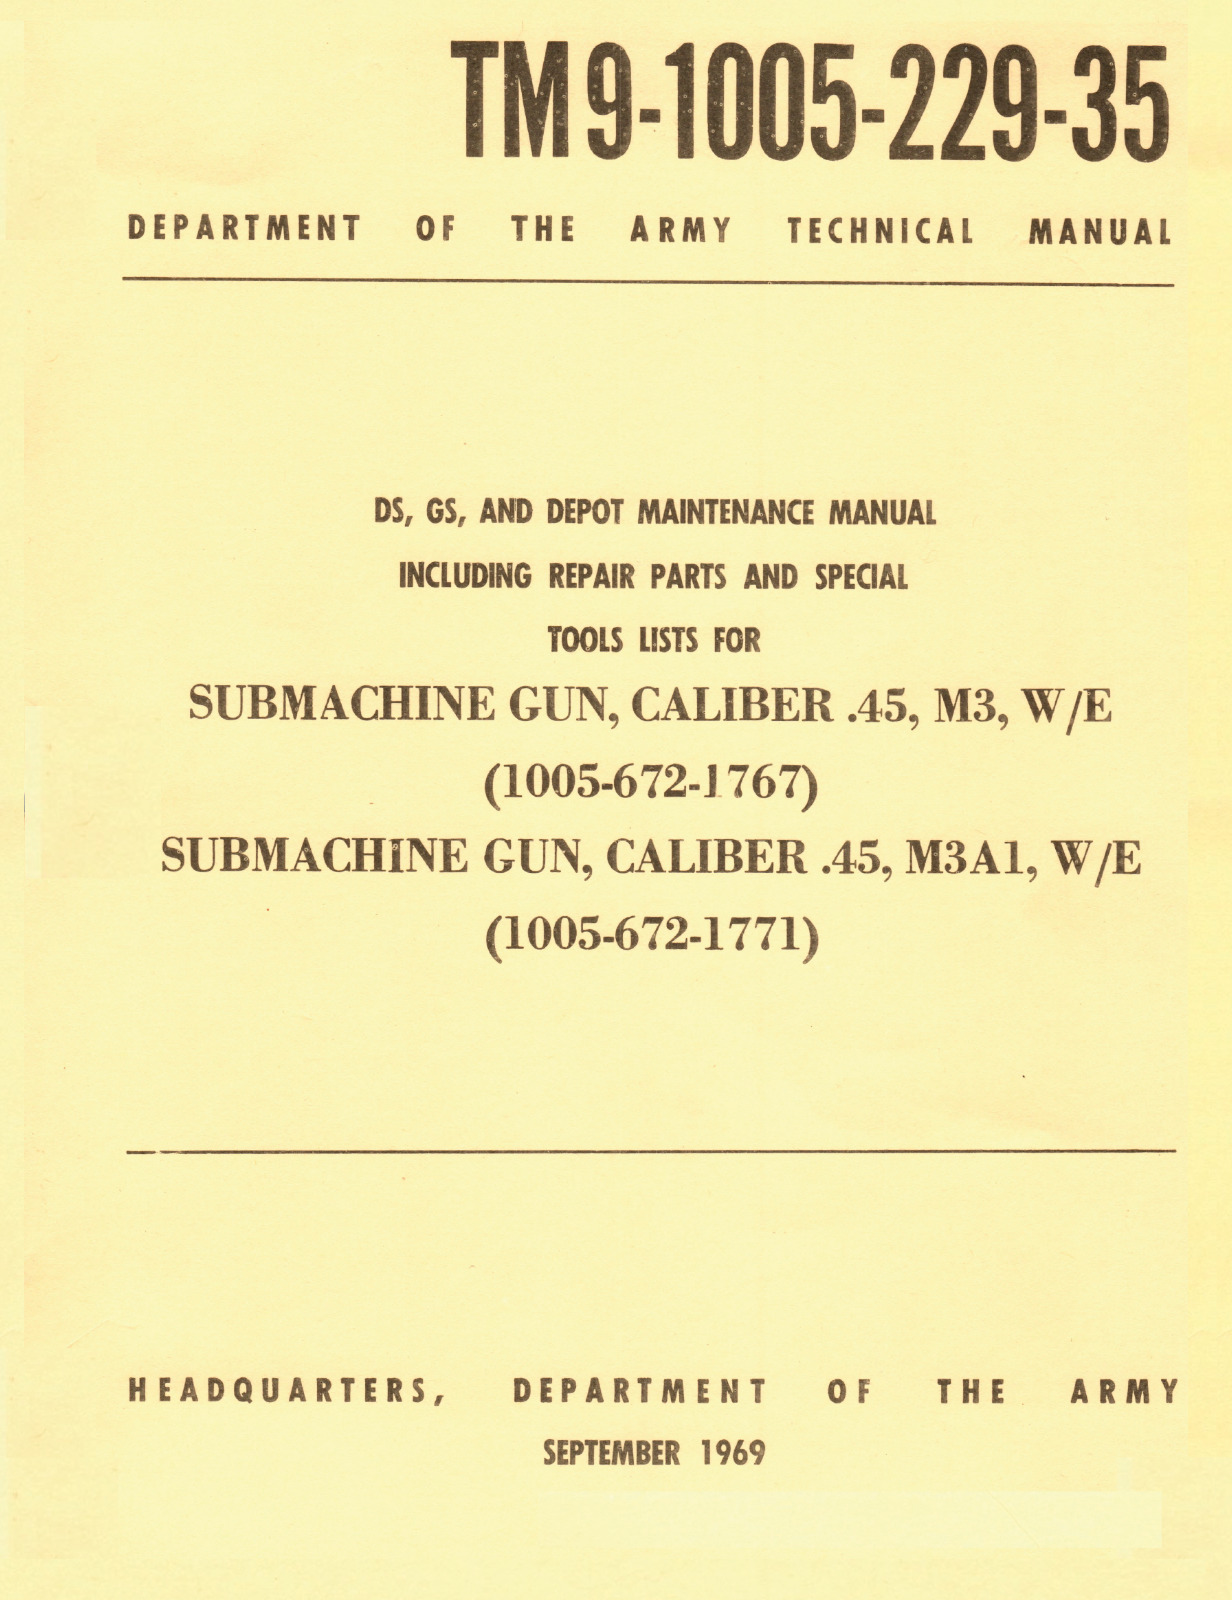 52 pg. 1969 TM 9-1105-229-35 SUBMACHINE GUN CALIBER 45 M3 M3A1 Manual on Data CD